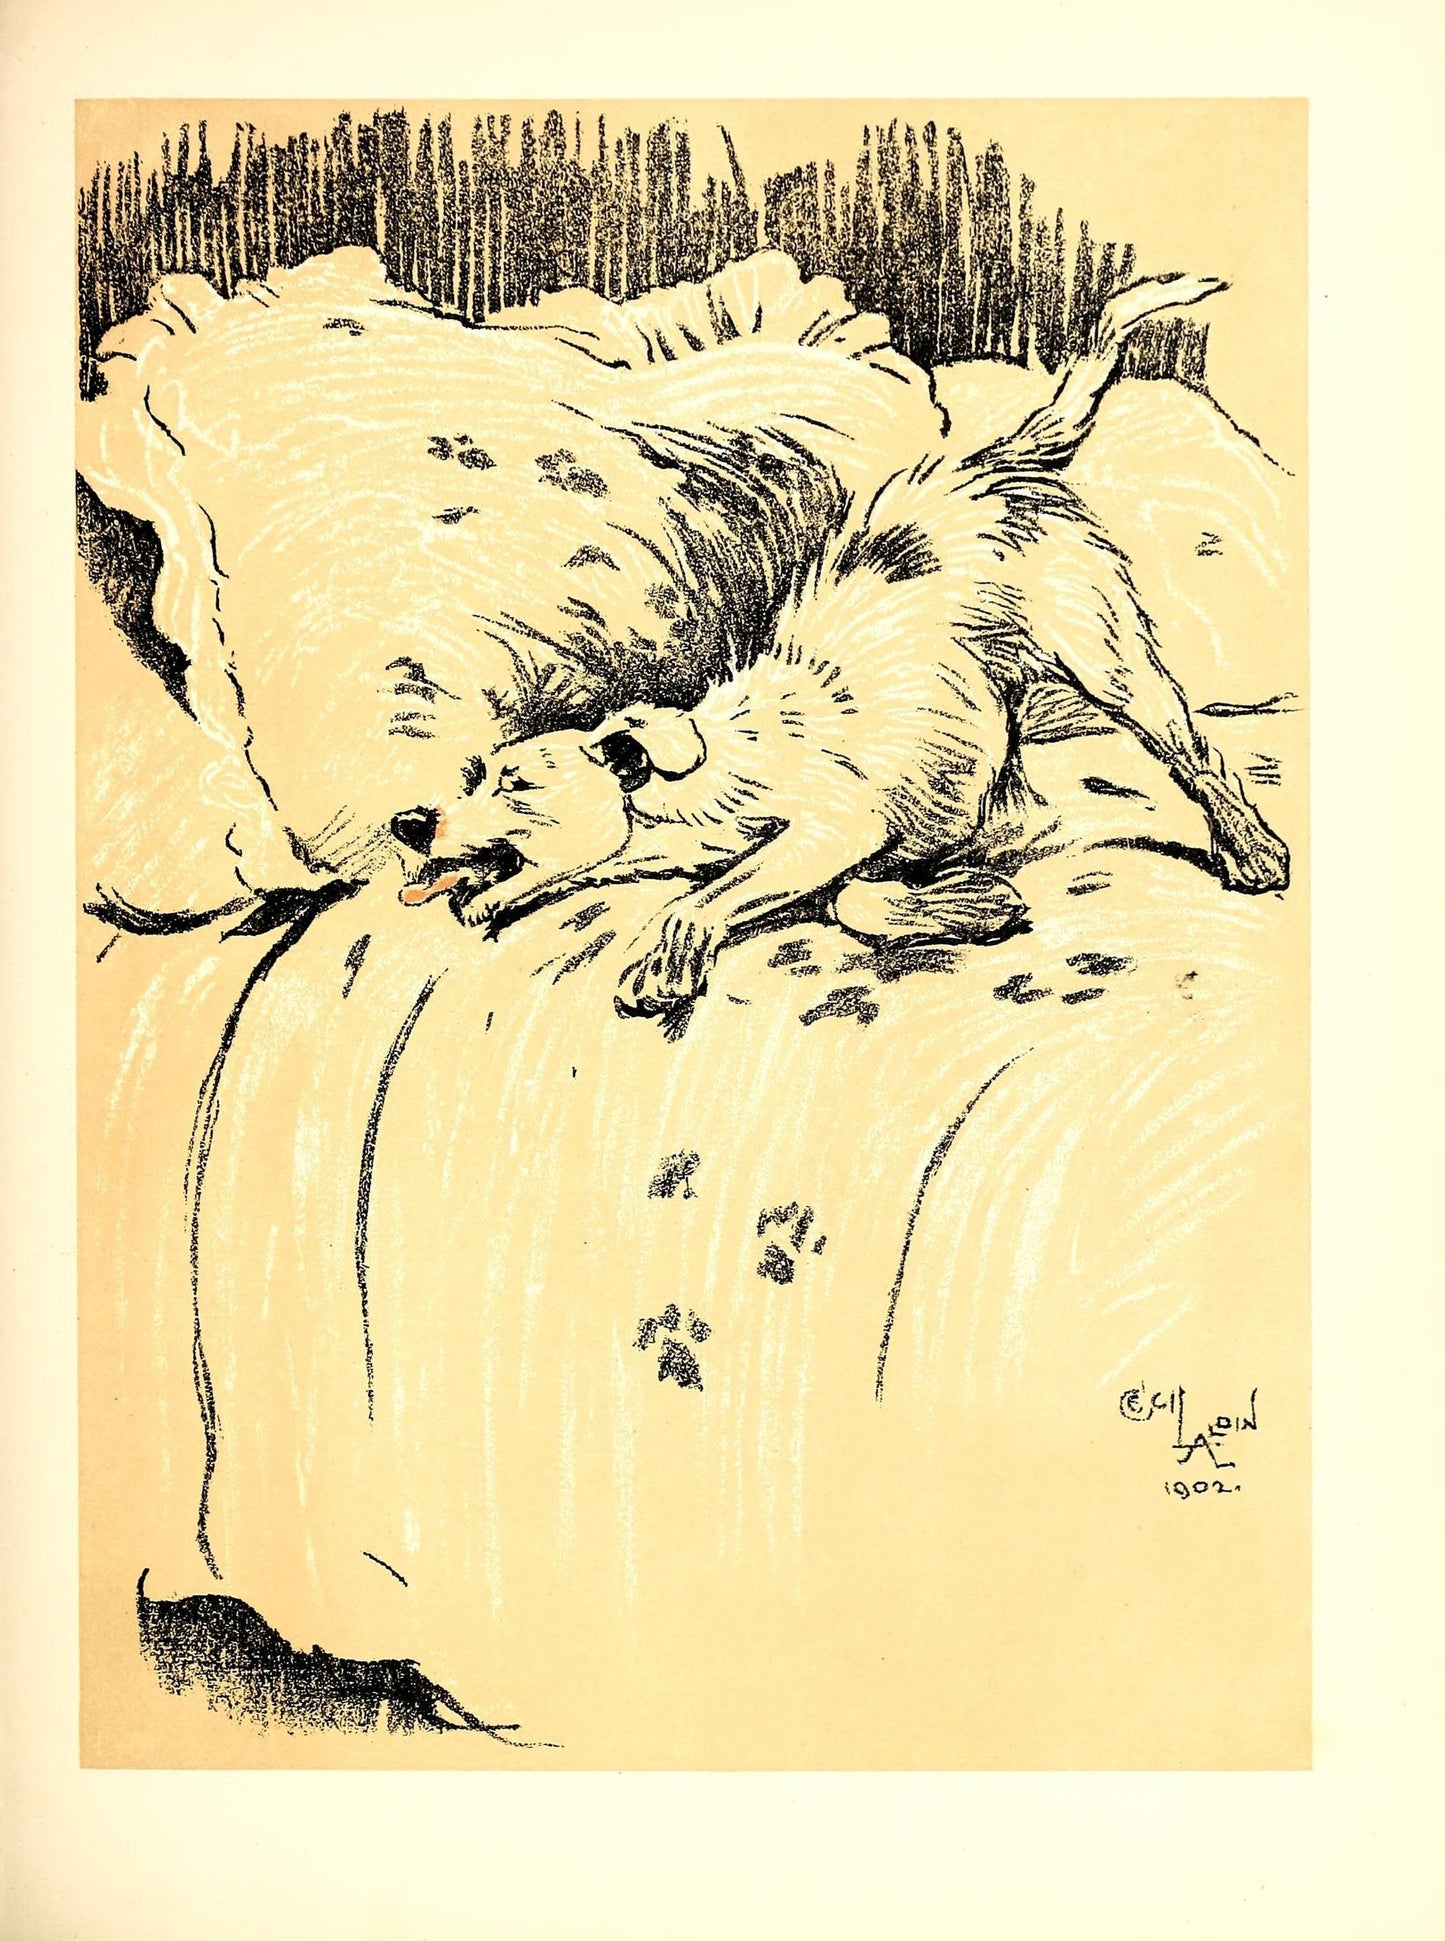 Muddy paws dog (1900s) | Vintage dog artwork prints | Cecil Aldin Posters, Prints, & Visual Artwork The Trumpet Shop   